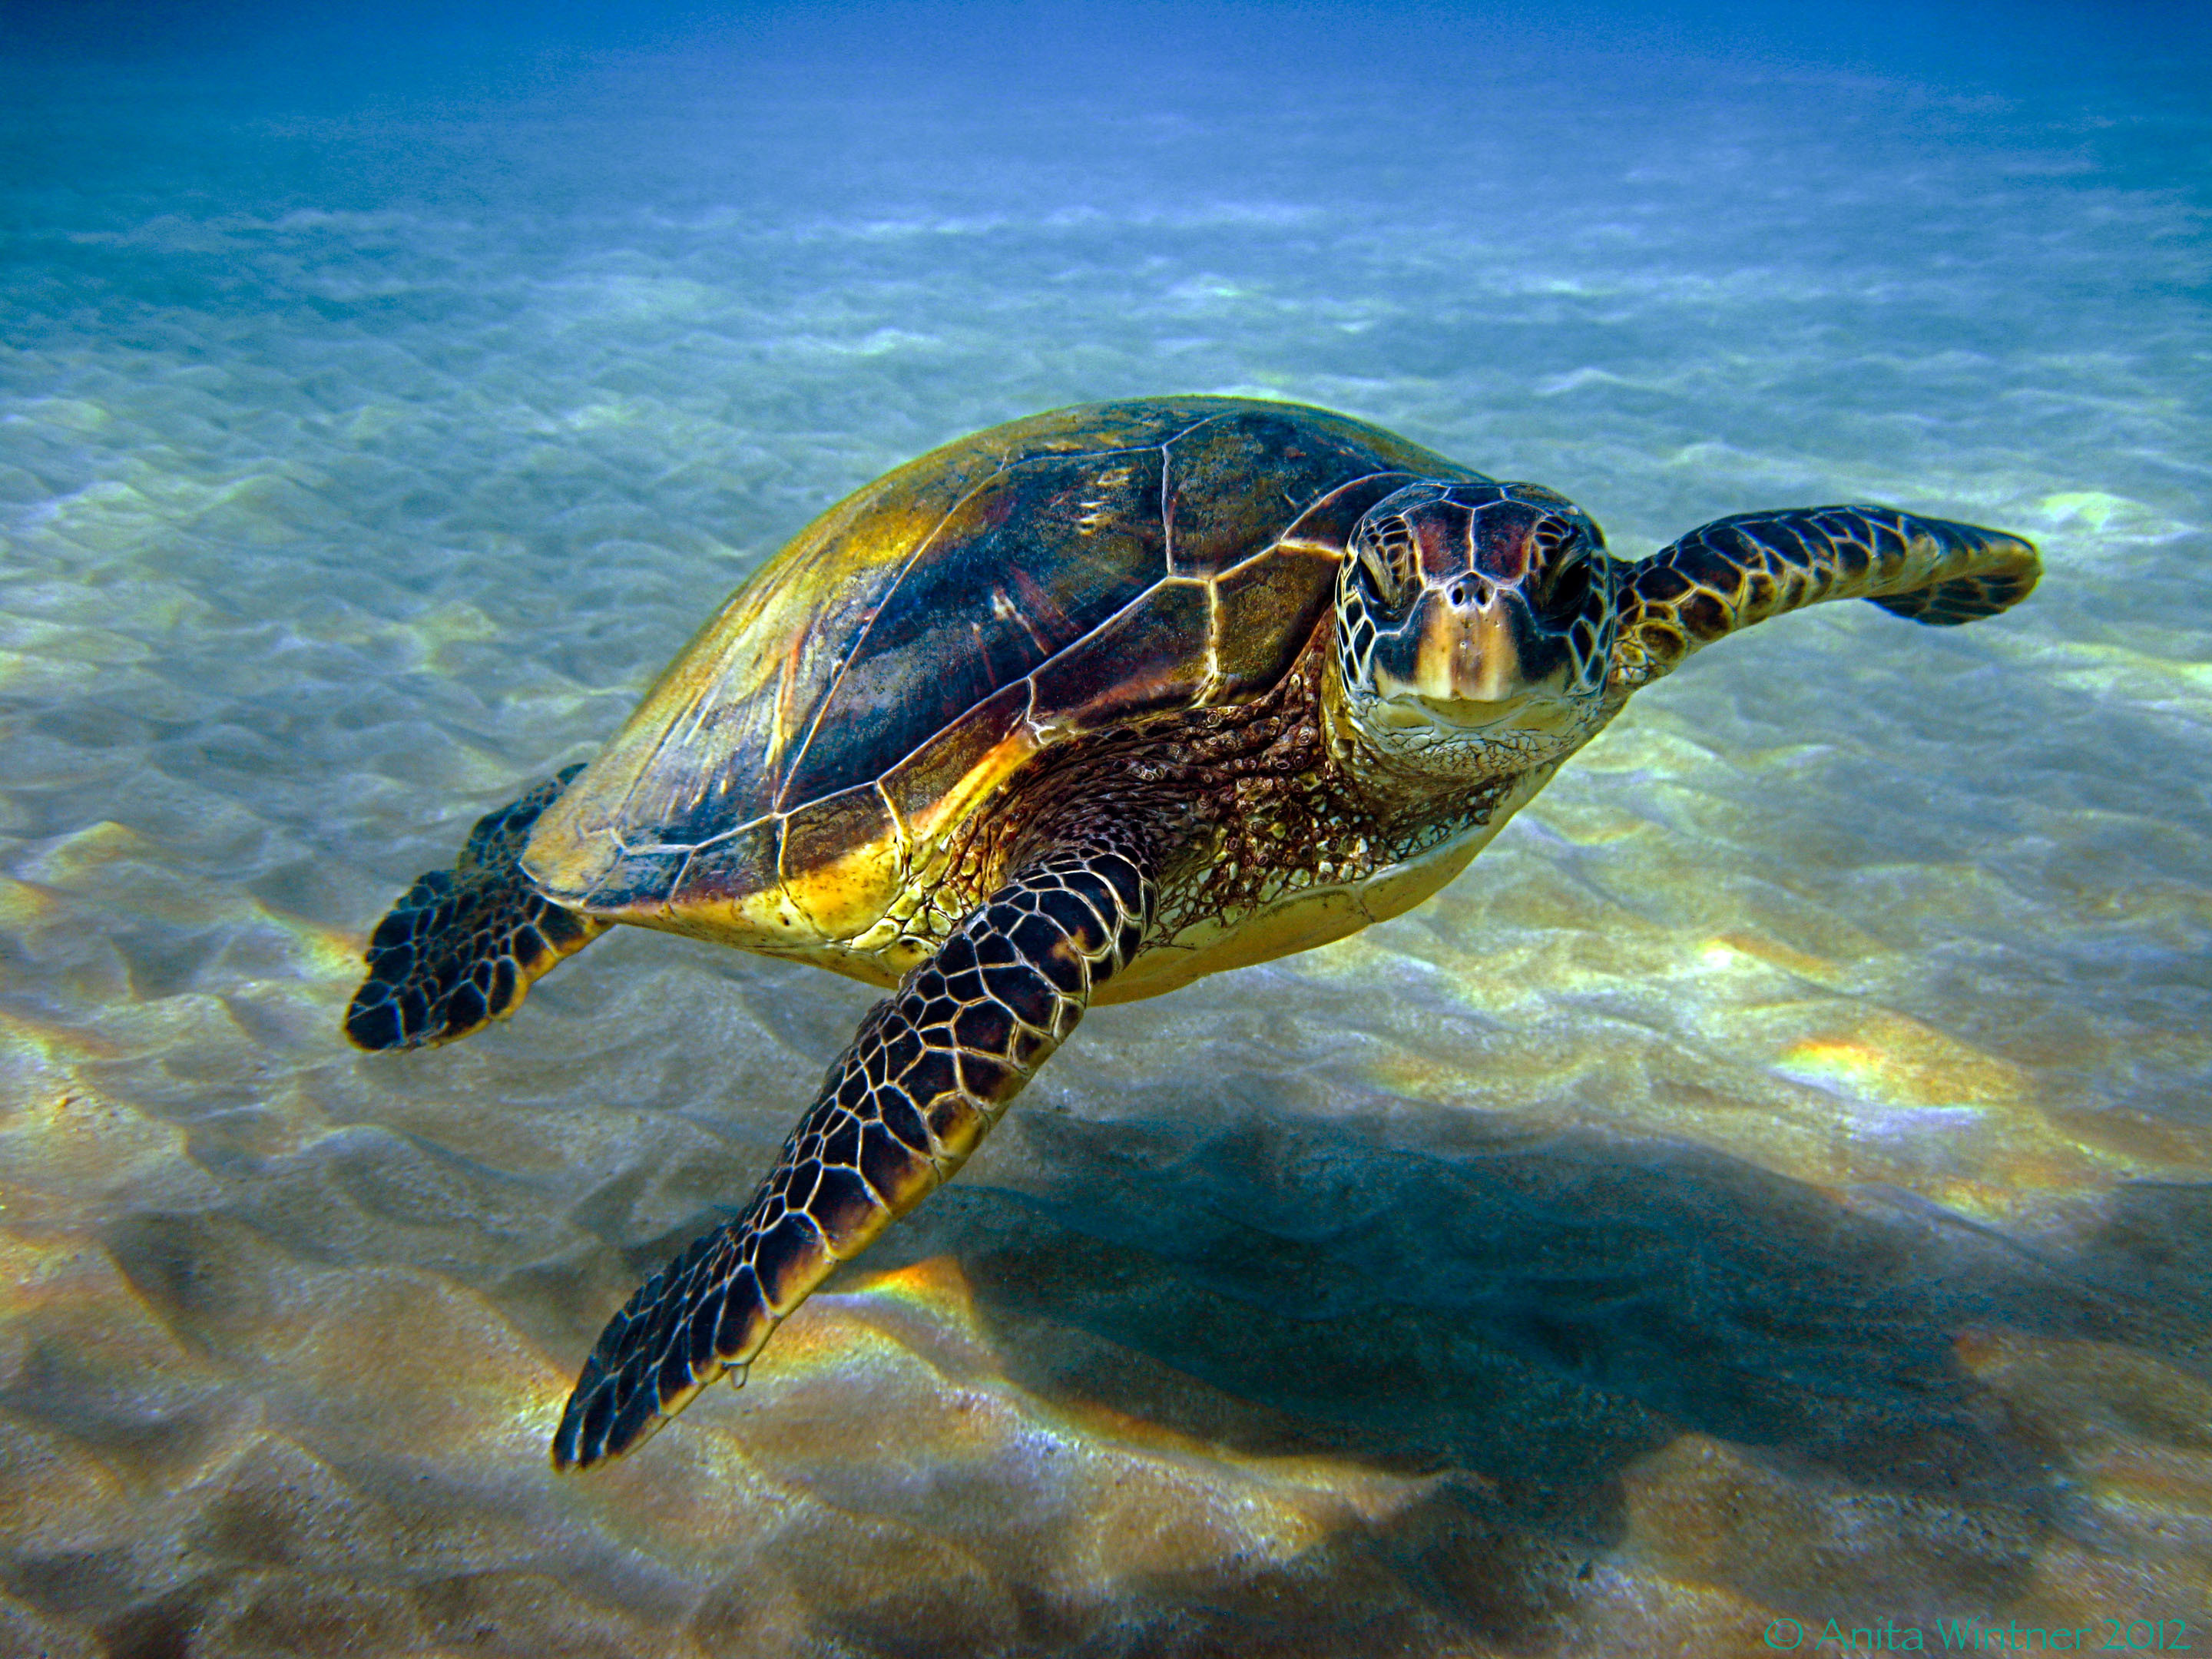 2880x2160 Hawaiian green sea turtle or honu | Sea Turtles Restoration Project |  Photo: Anita Wintner